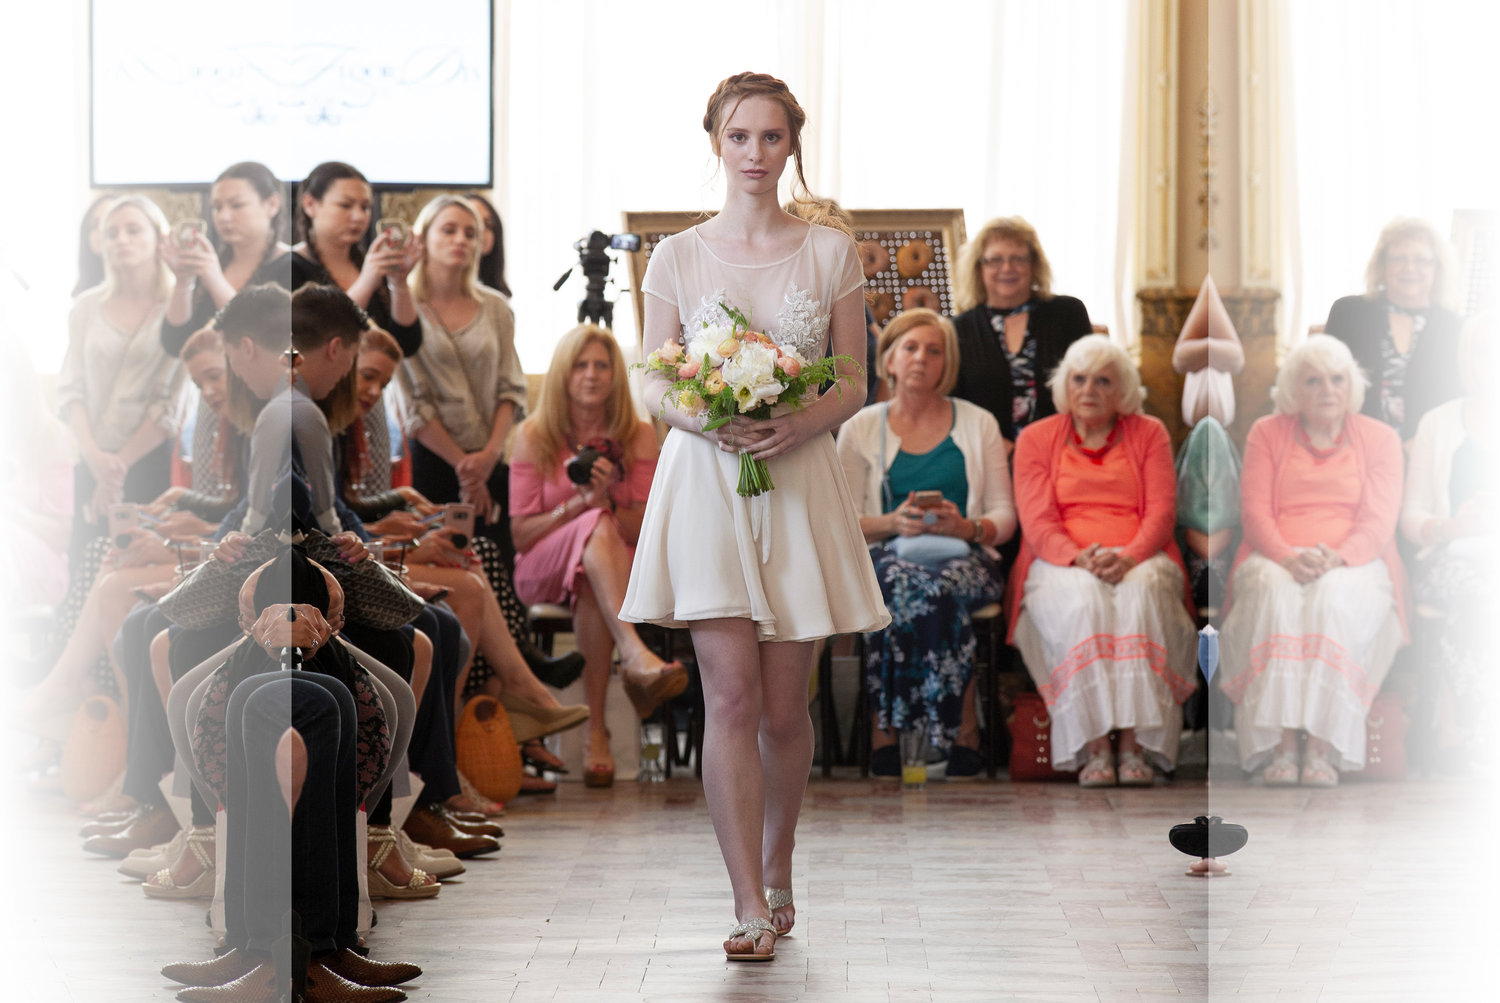 Bridal designs hit the SWNE runway in 2019